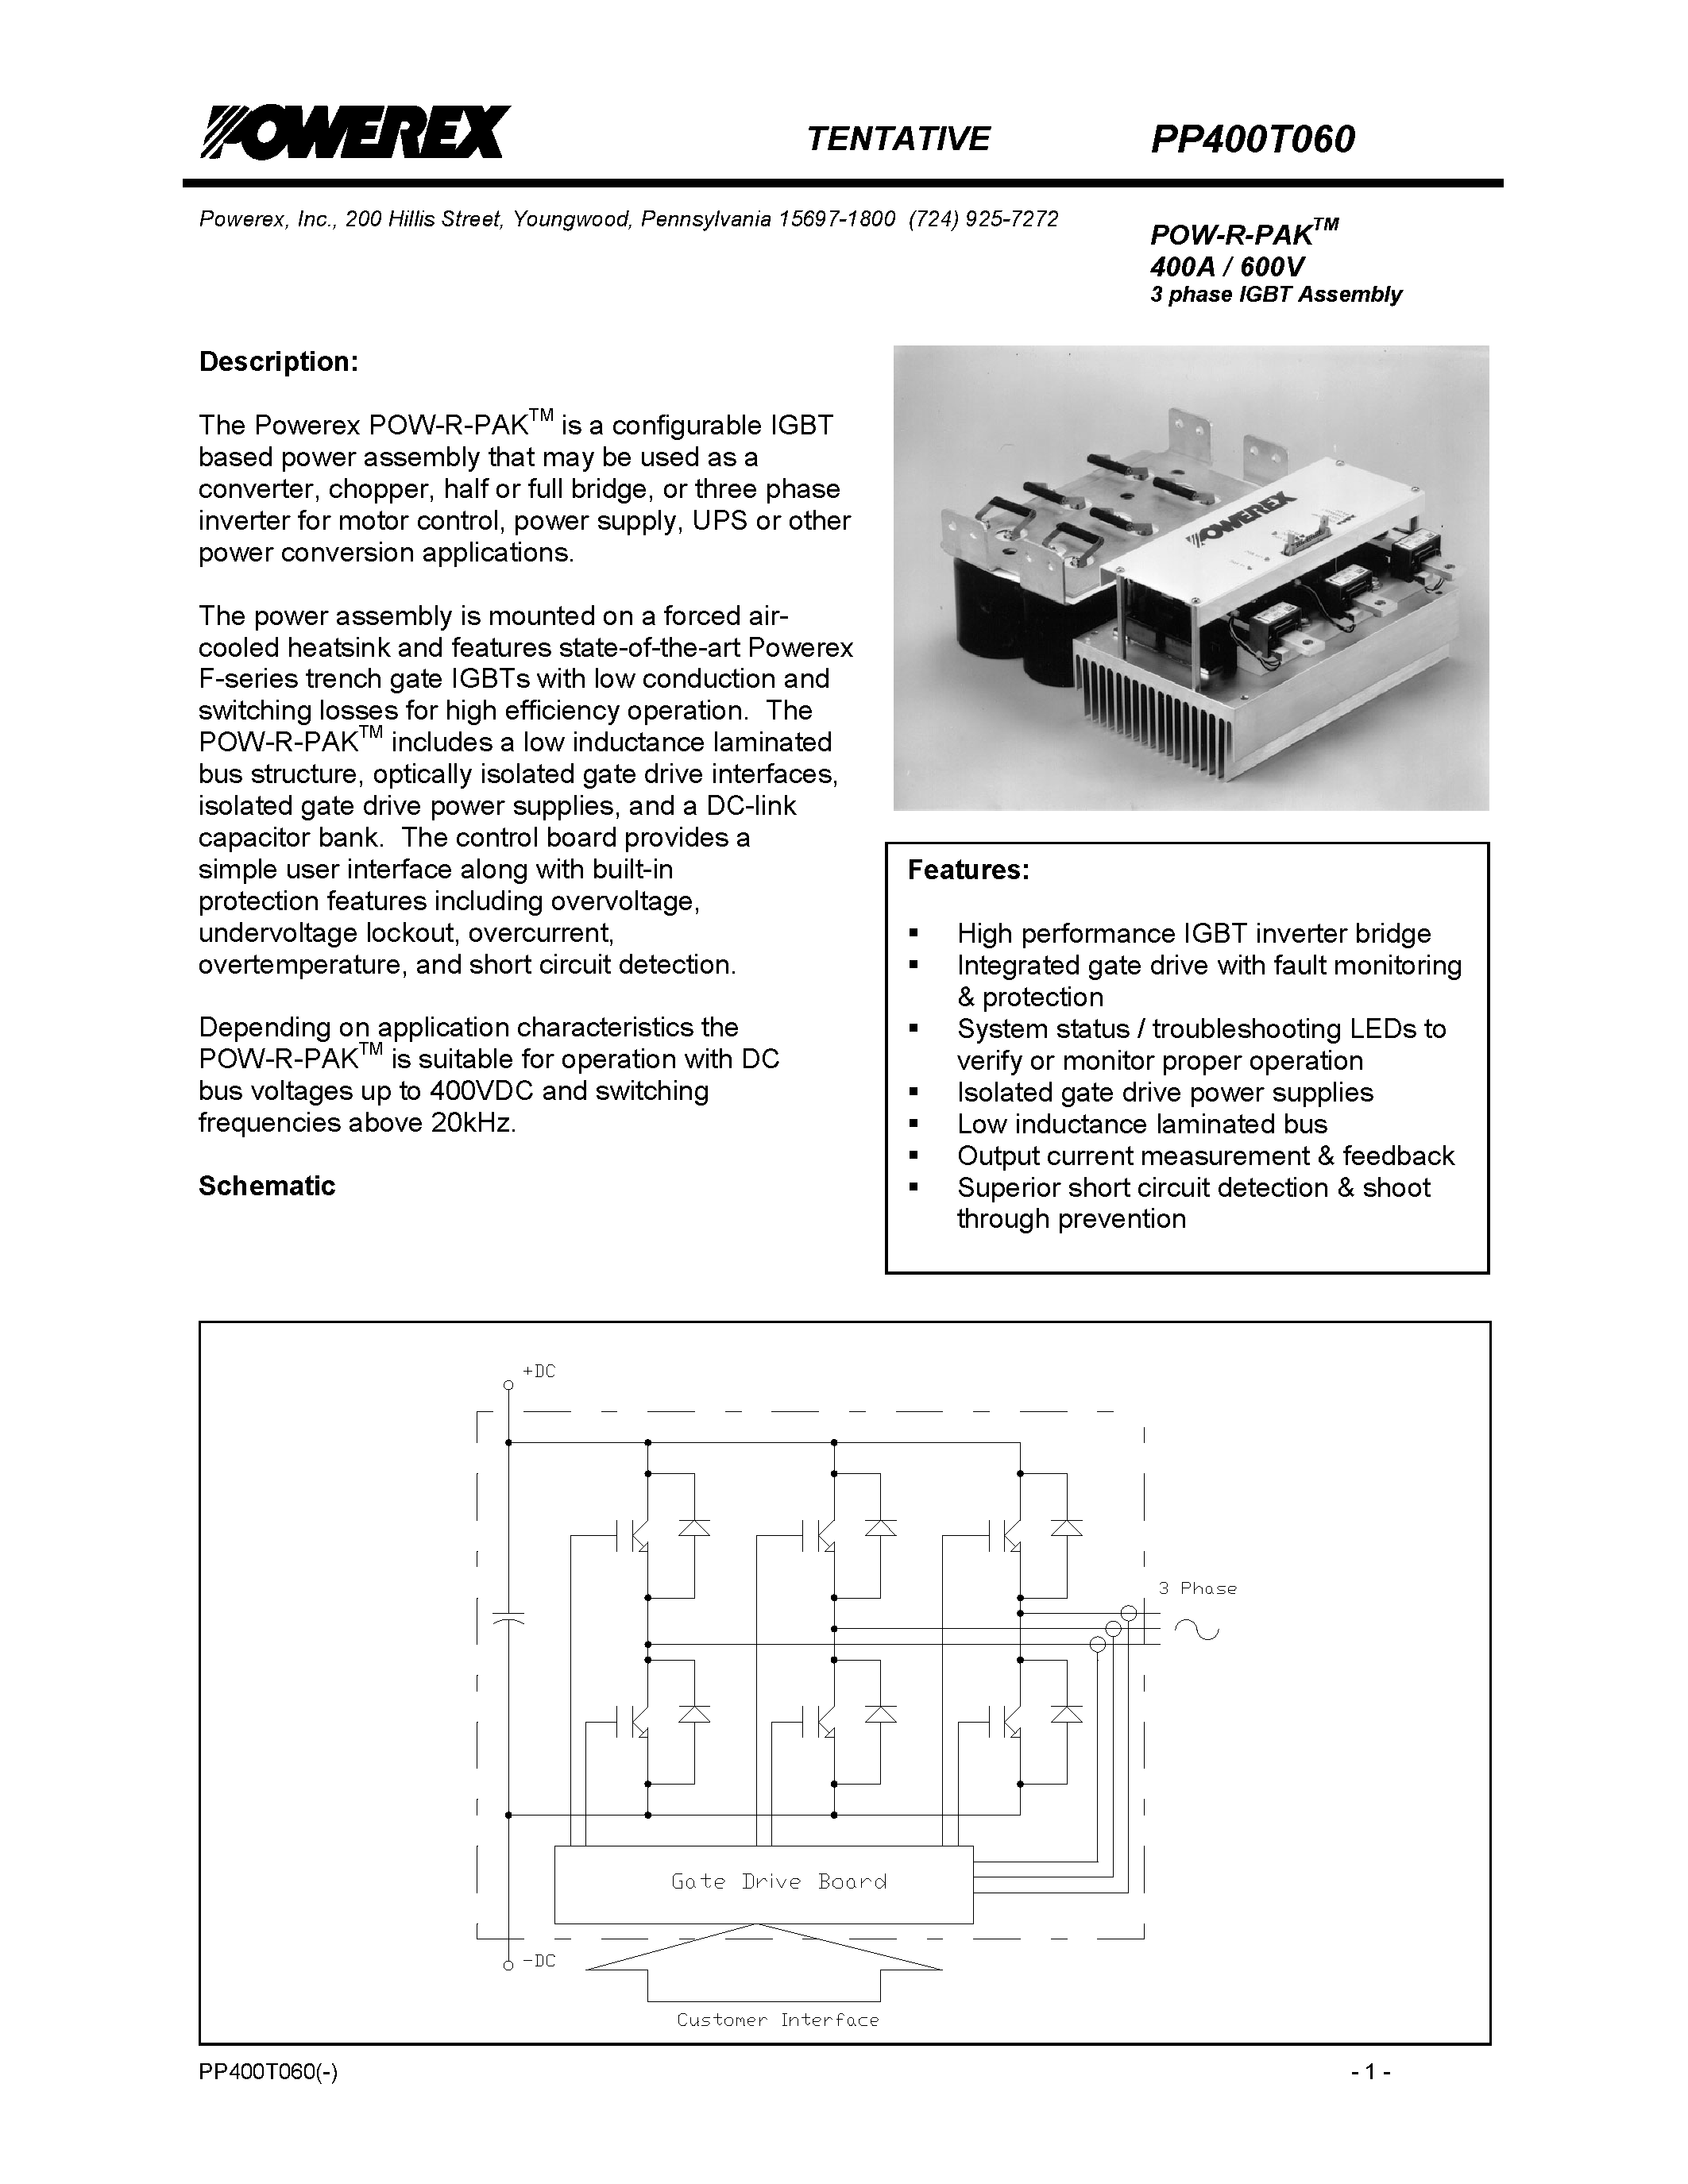 Даташит PP400T060 - POW-R-PAK 400A / 600V 3 phase IGBT Assembly страница 1